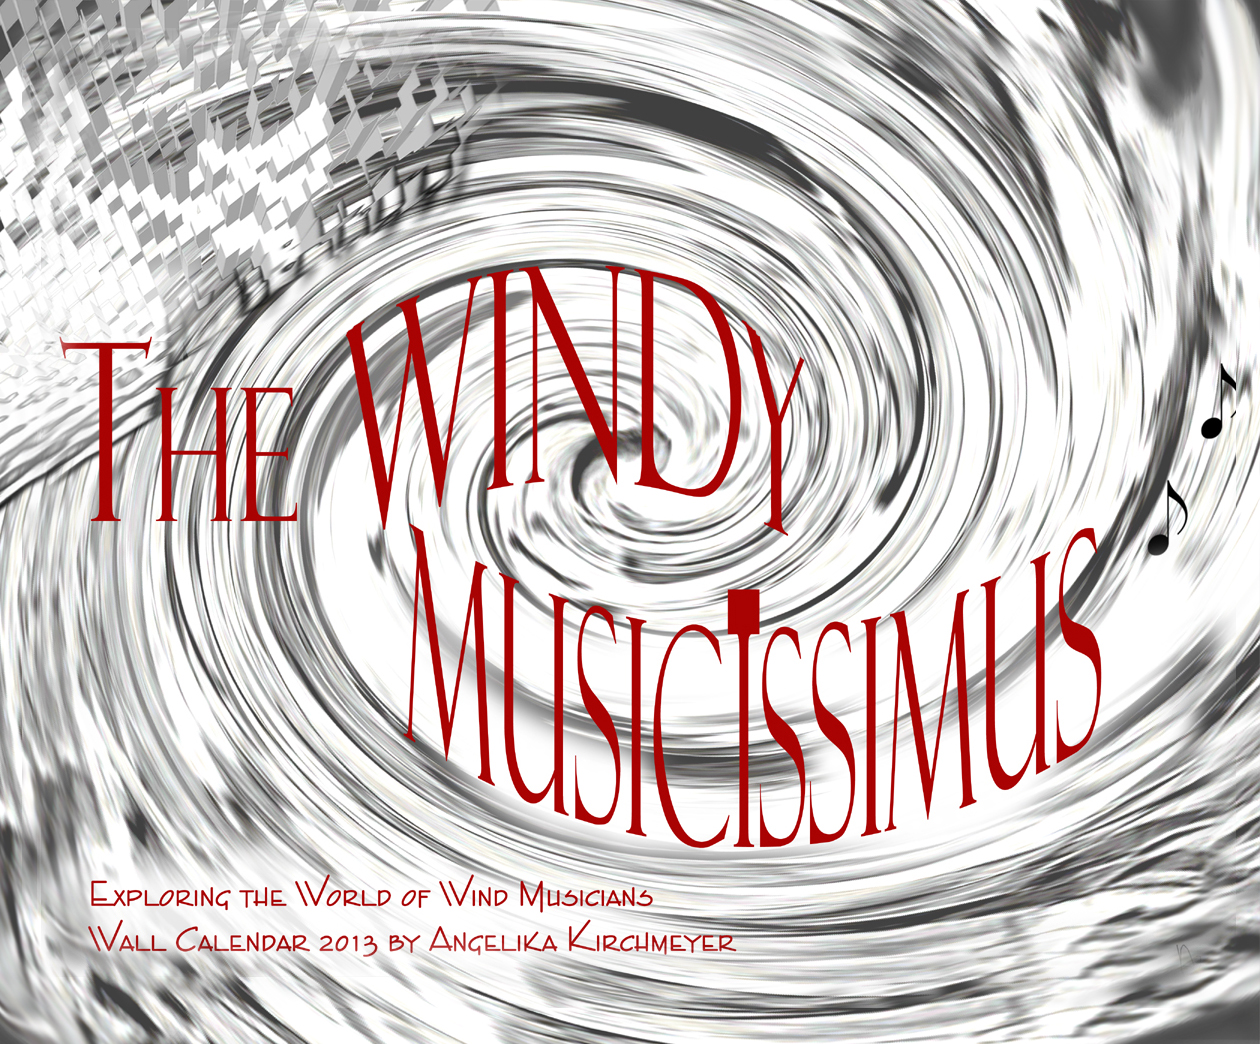 The Windy Musicissimus